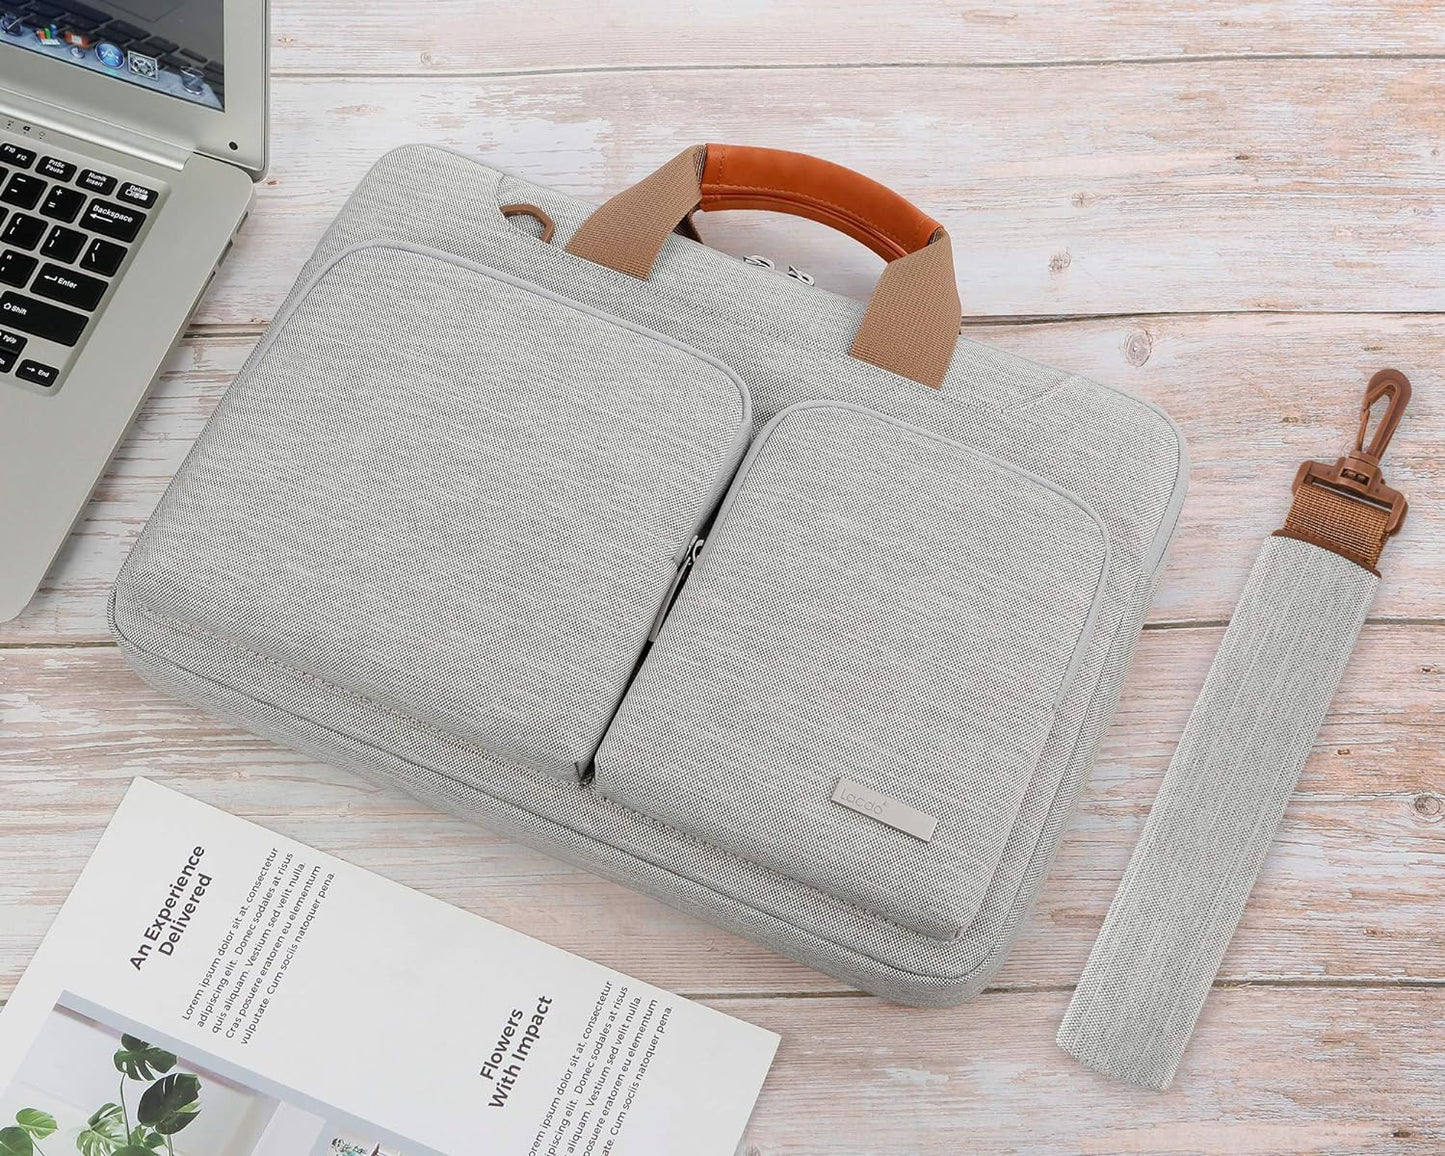 Lacdo 360° Protective Laptop Shoulder Bag, 15-15.6 inch Laptop Sleeve Case